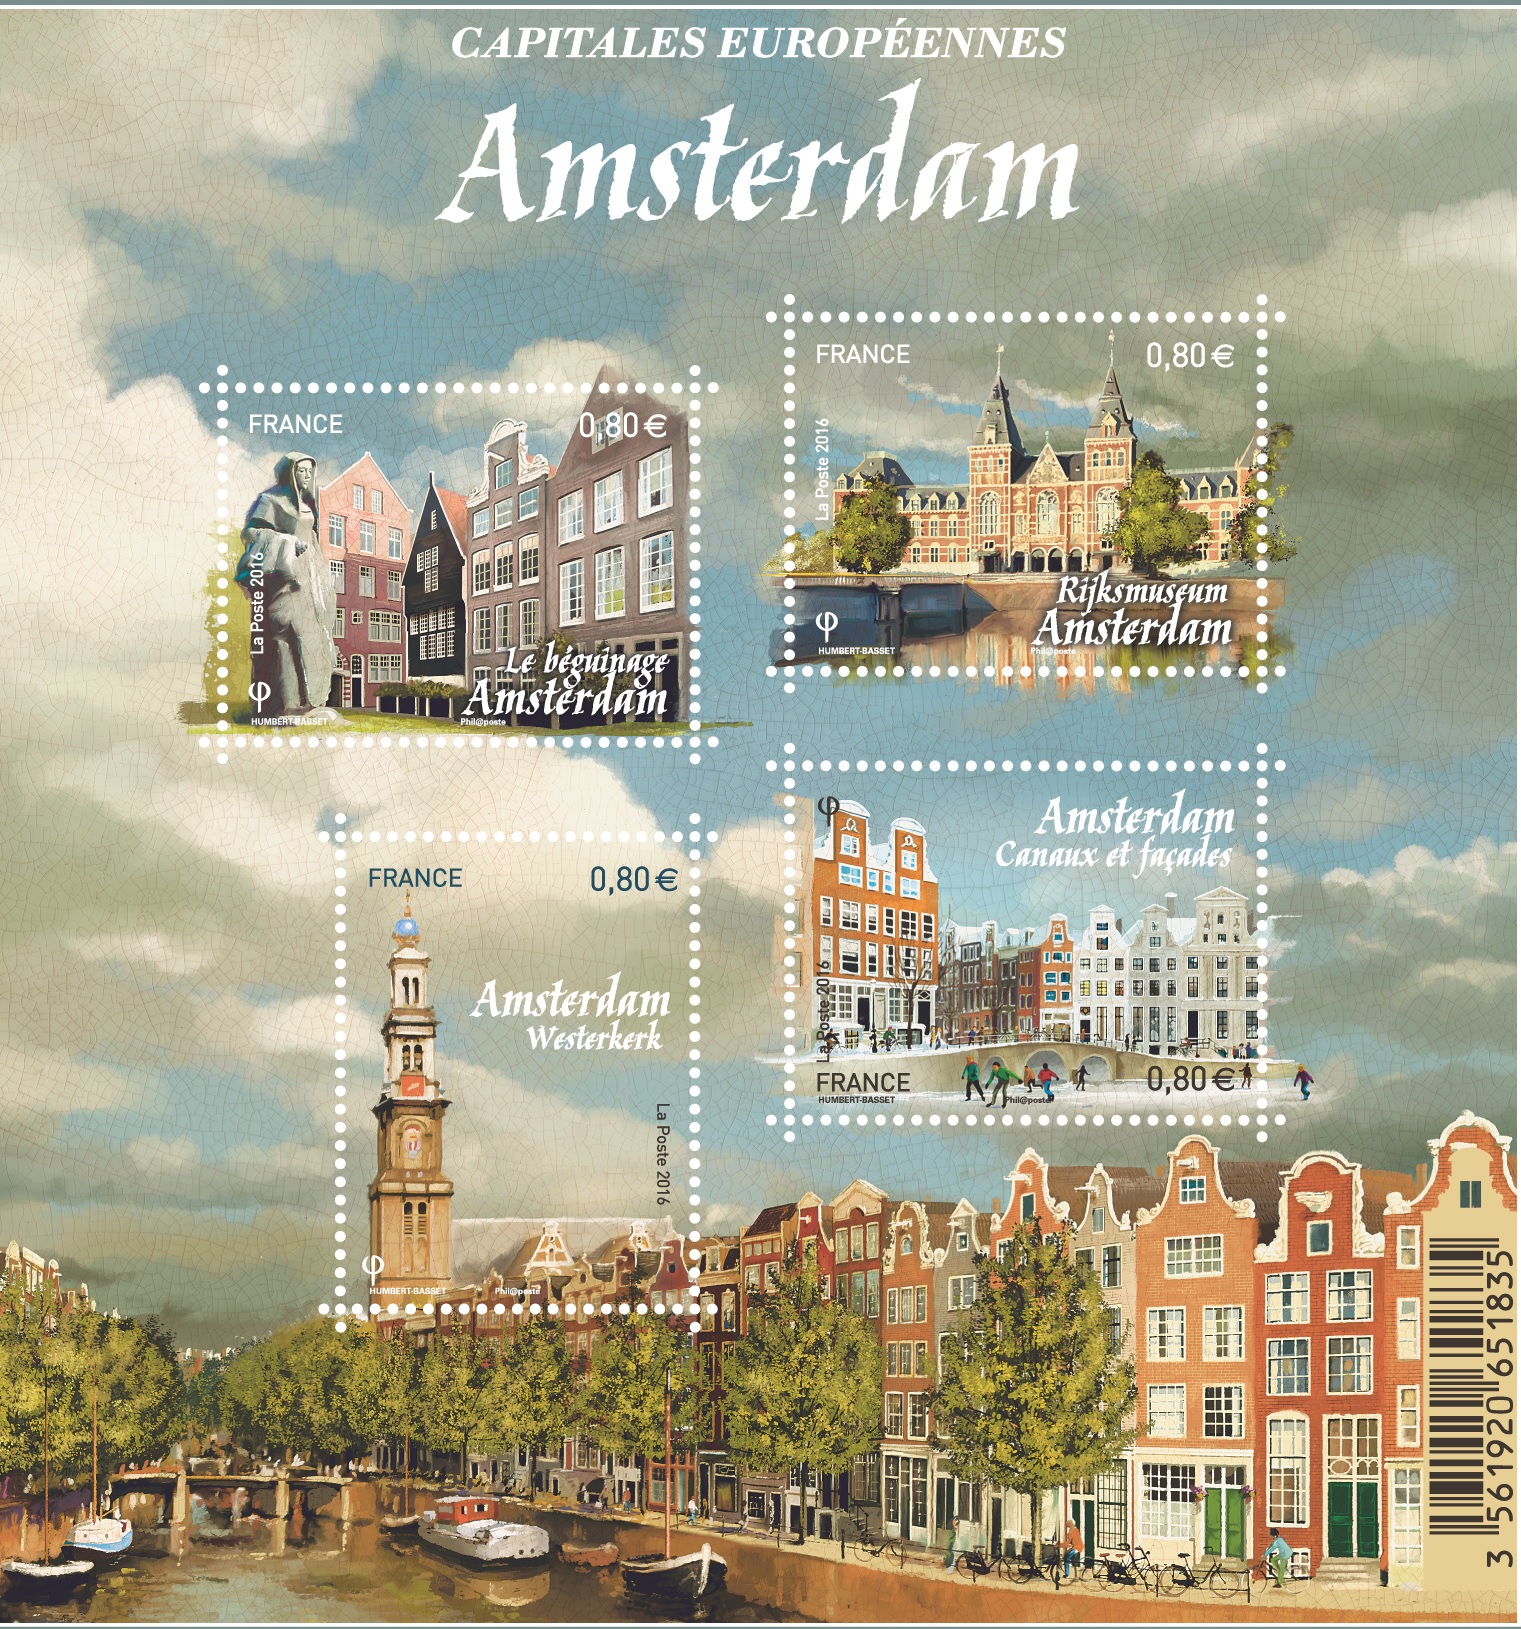 Emission Capitales européennes : Amsterdam